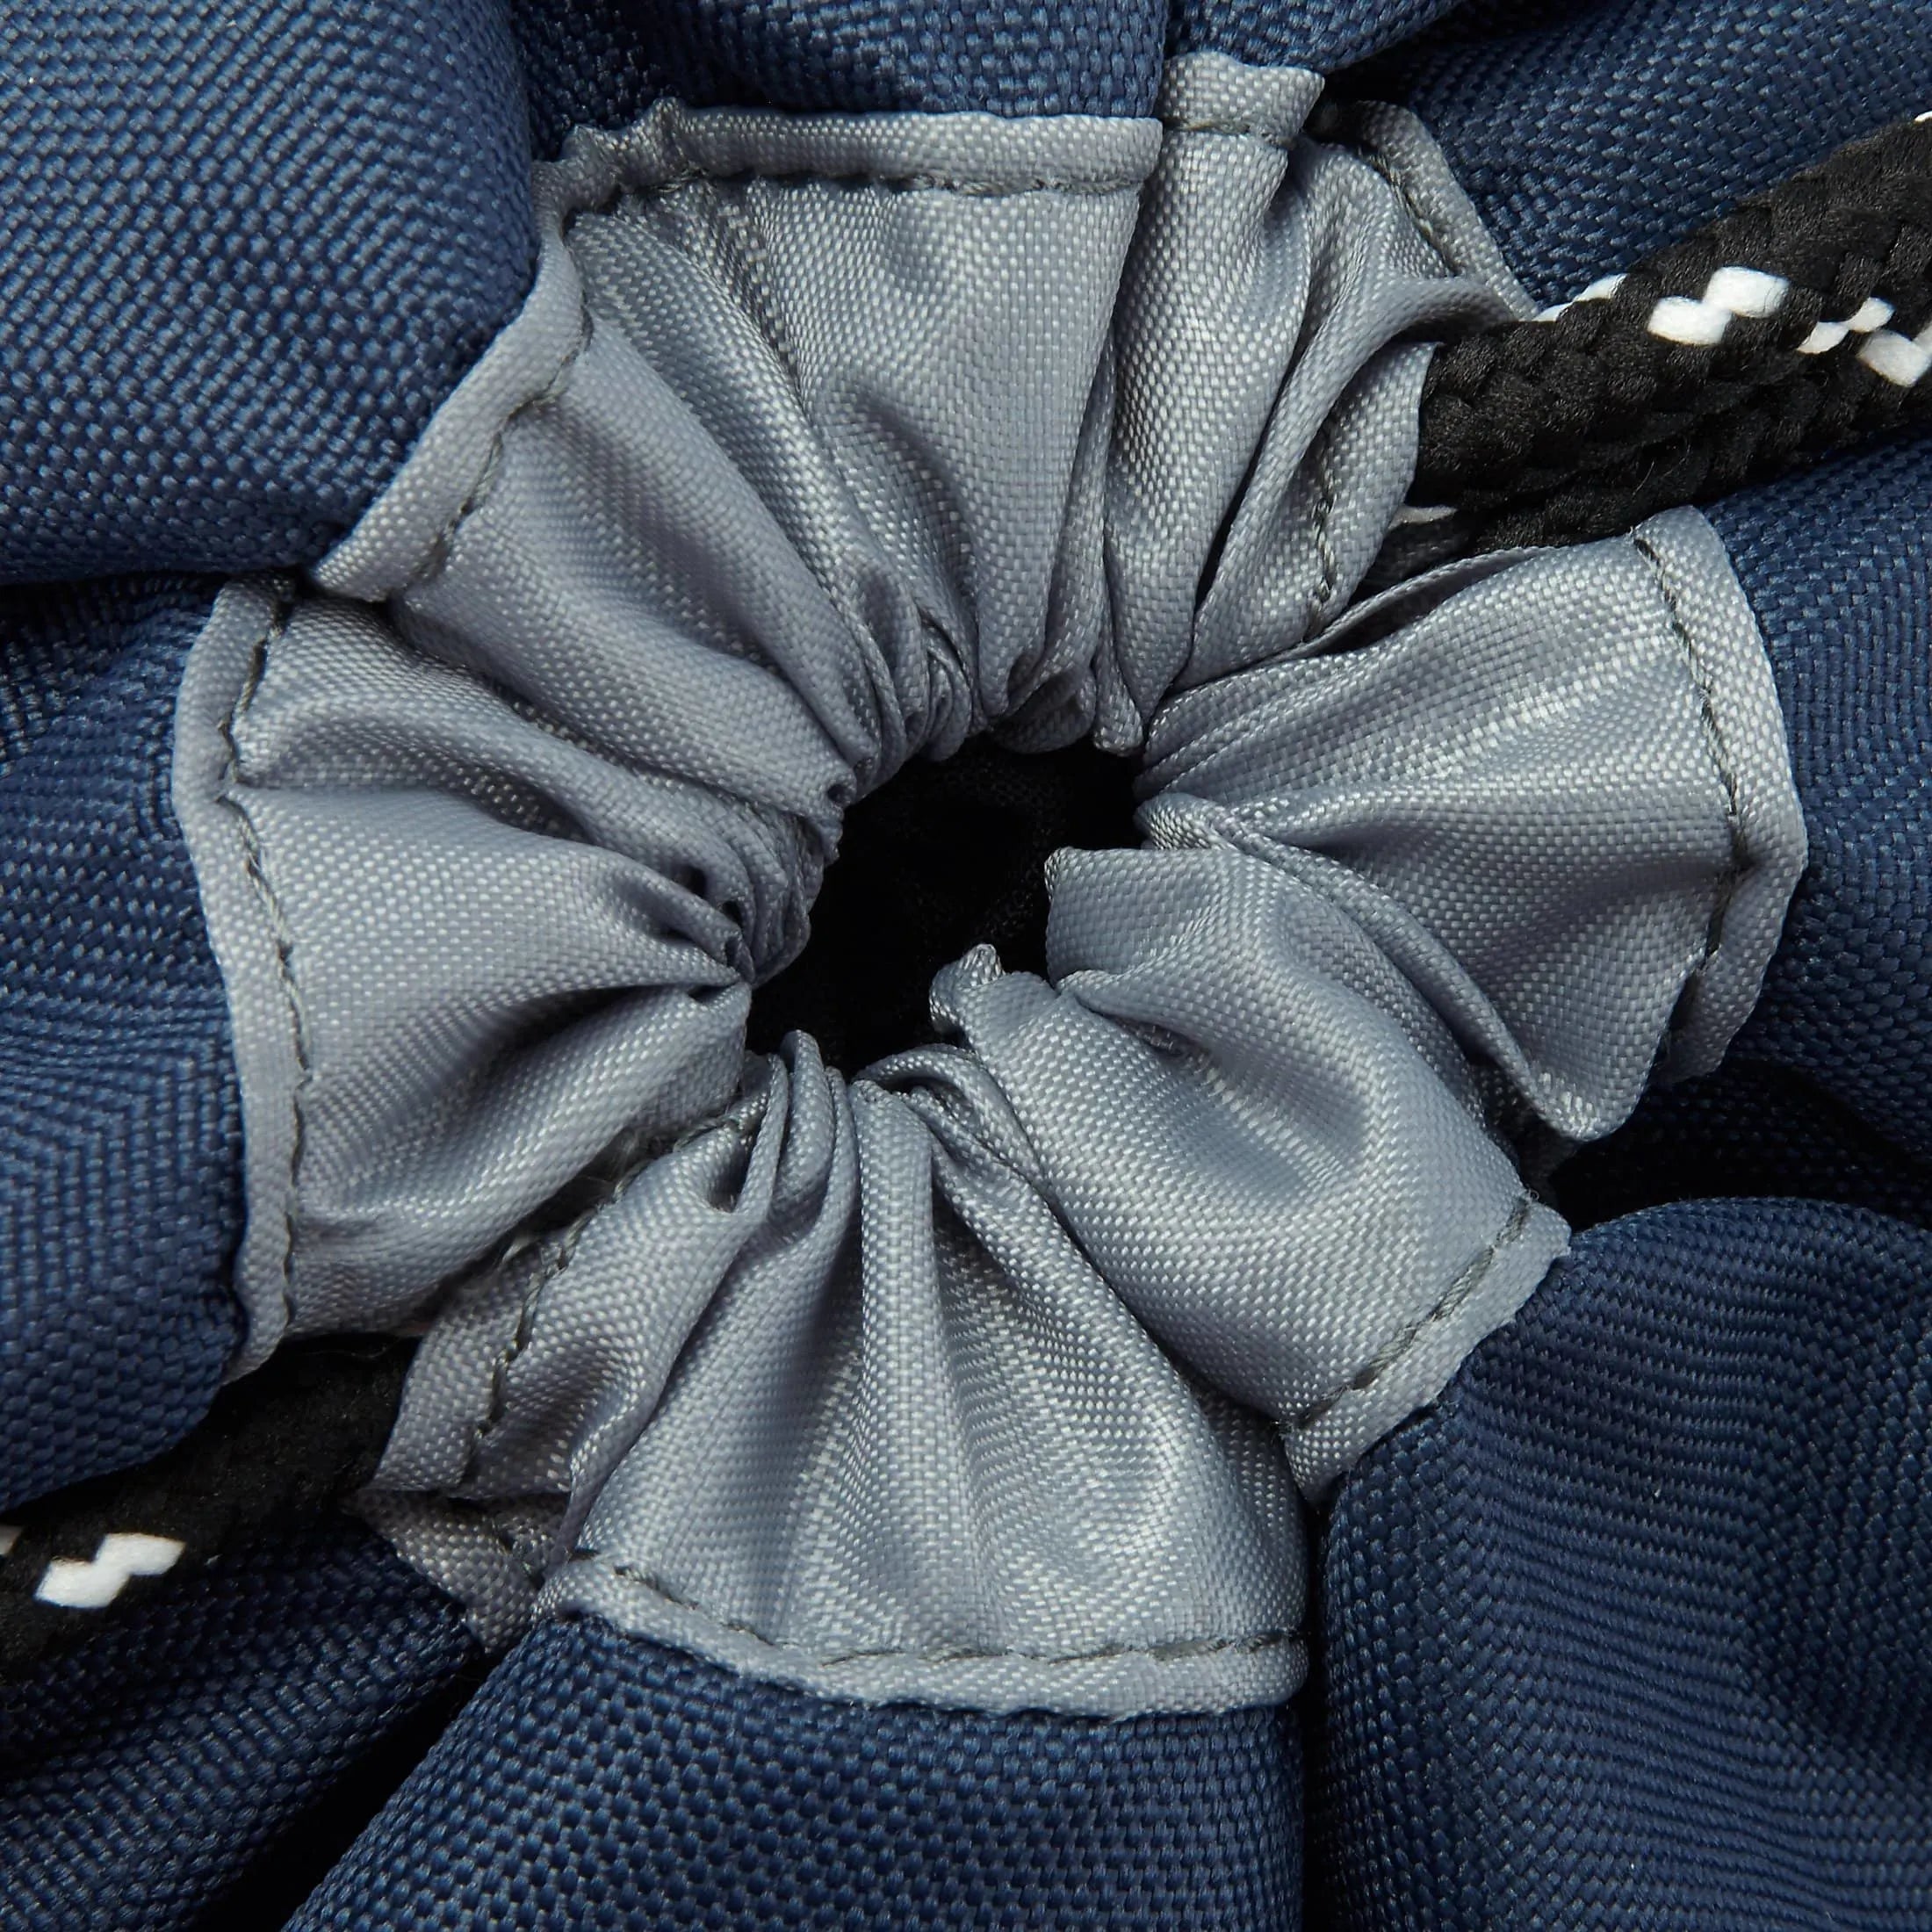 Chiemsee Sports & Travel Bags Drawstring Sportbeutel 45 cm - dark blue-pink